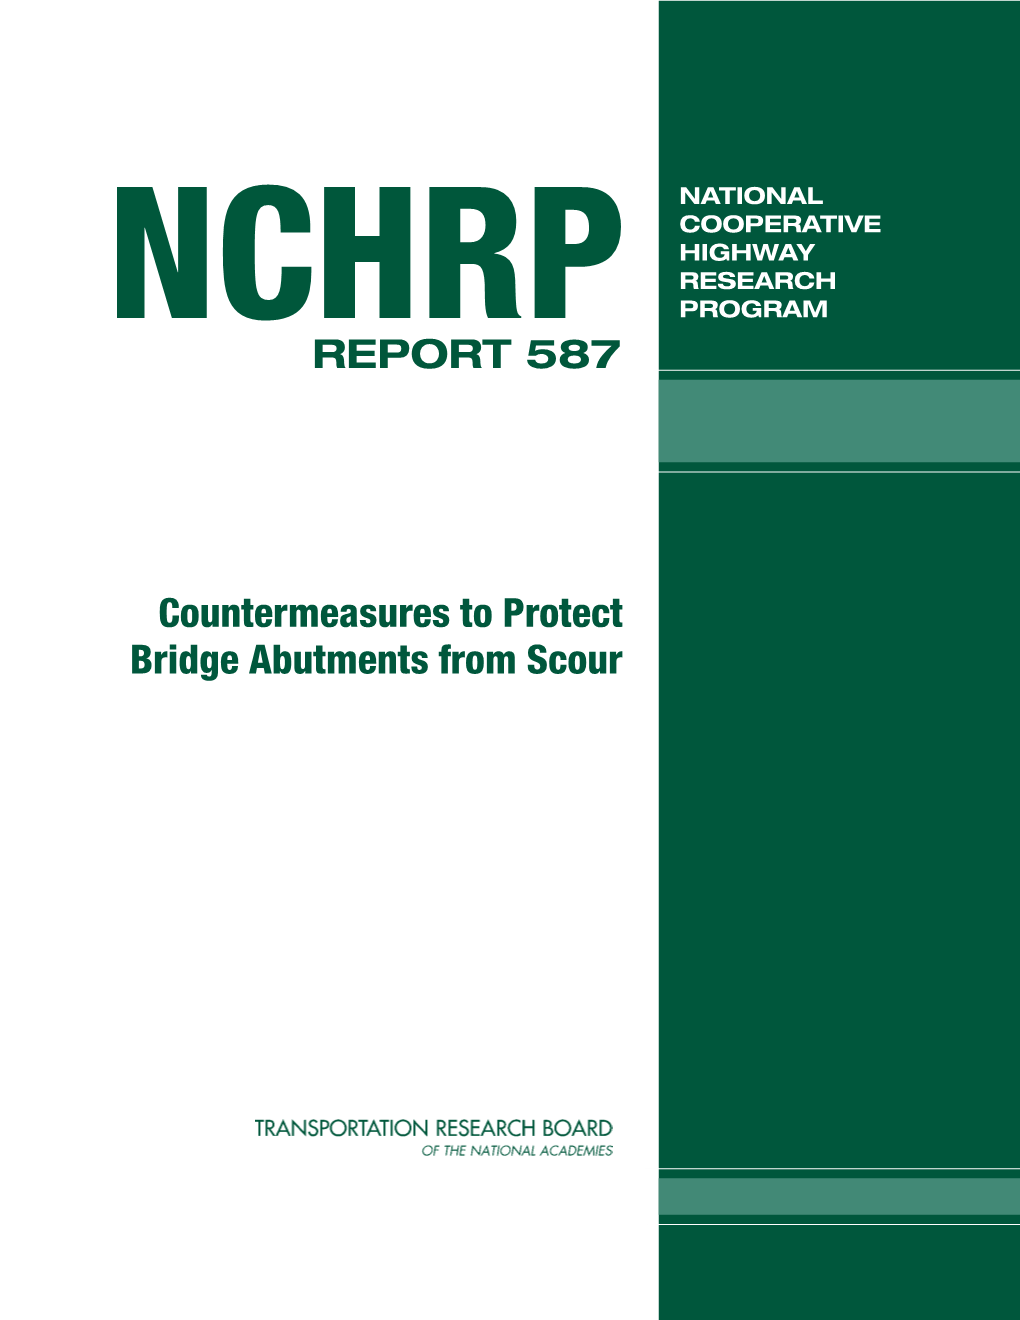 NCHRP Report 587 – Countermeasures to Protect Bridge